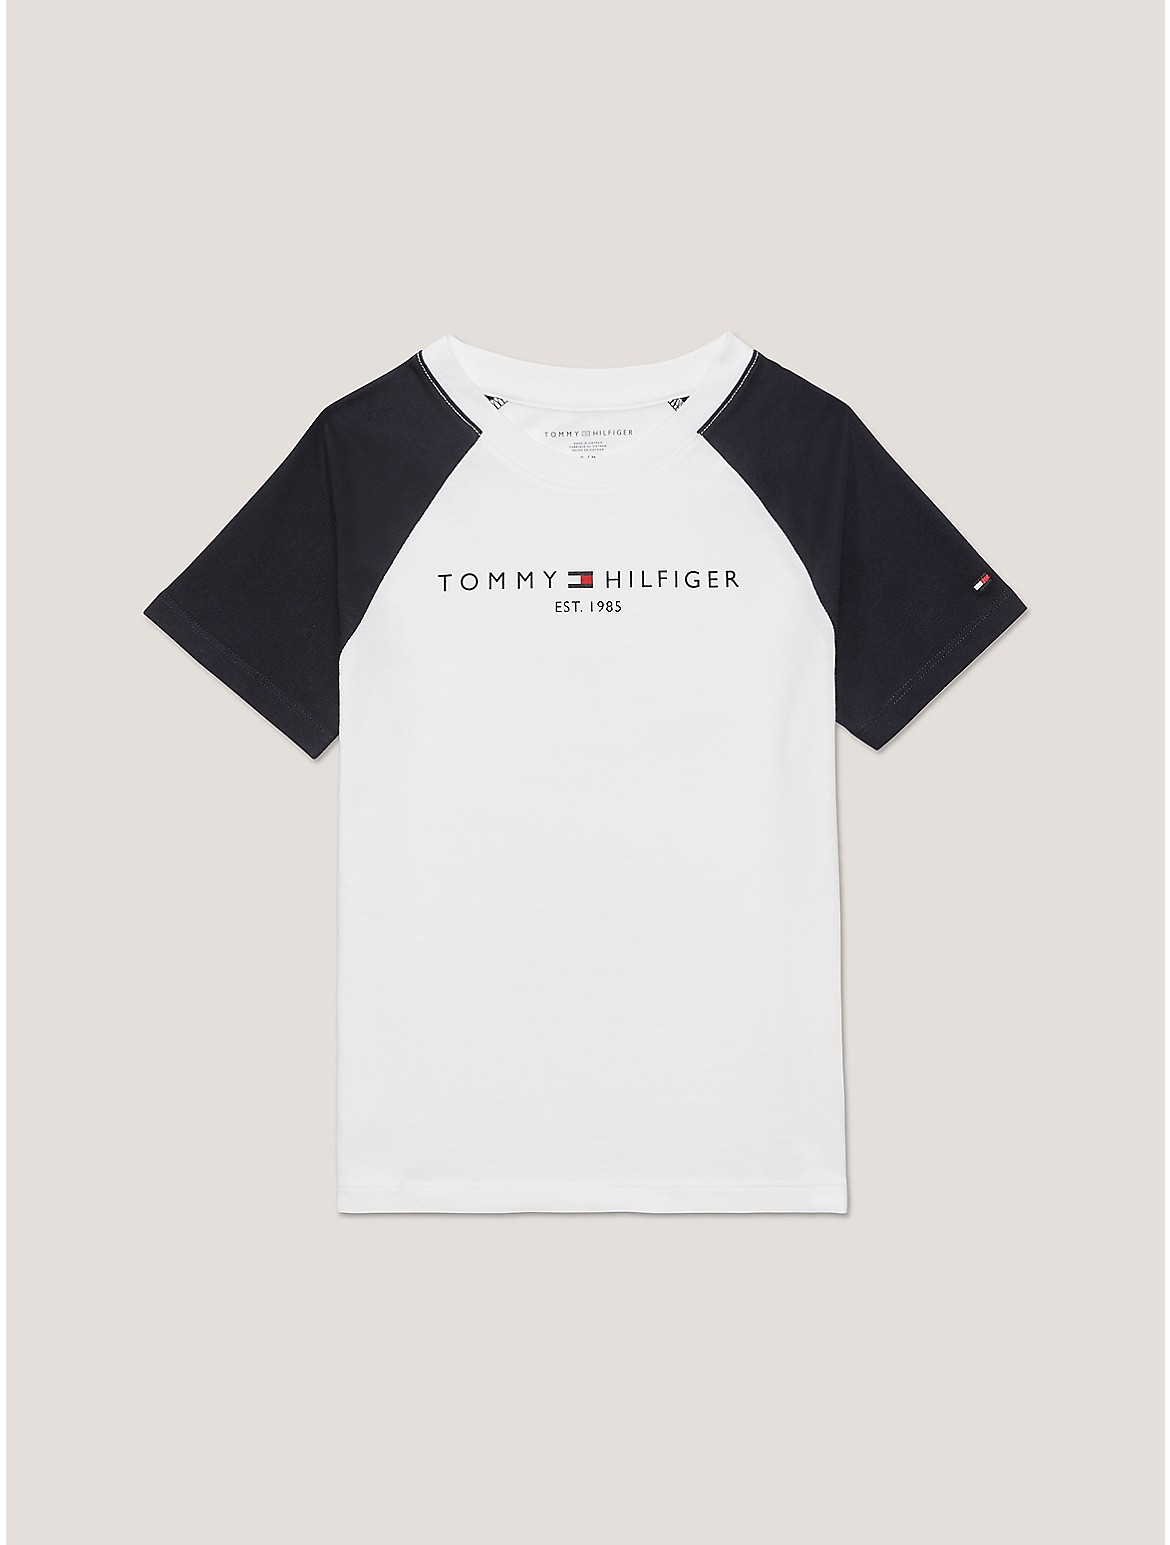 Tommy Hilfiger Boys' Kids' Baseball T-Shirt - White - S